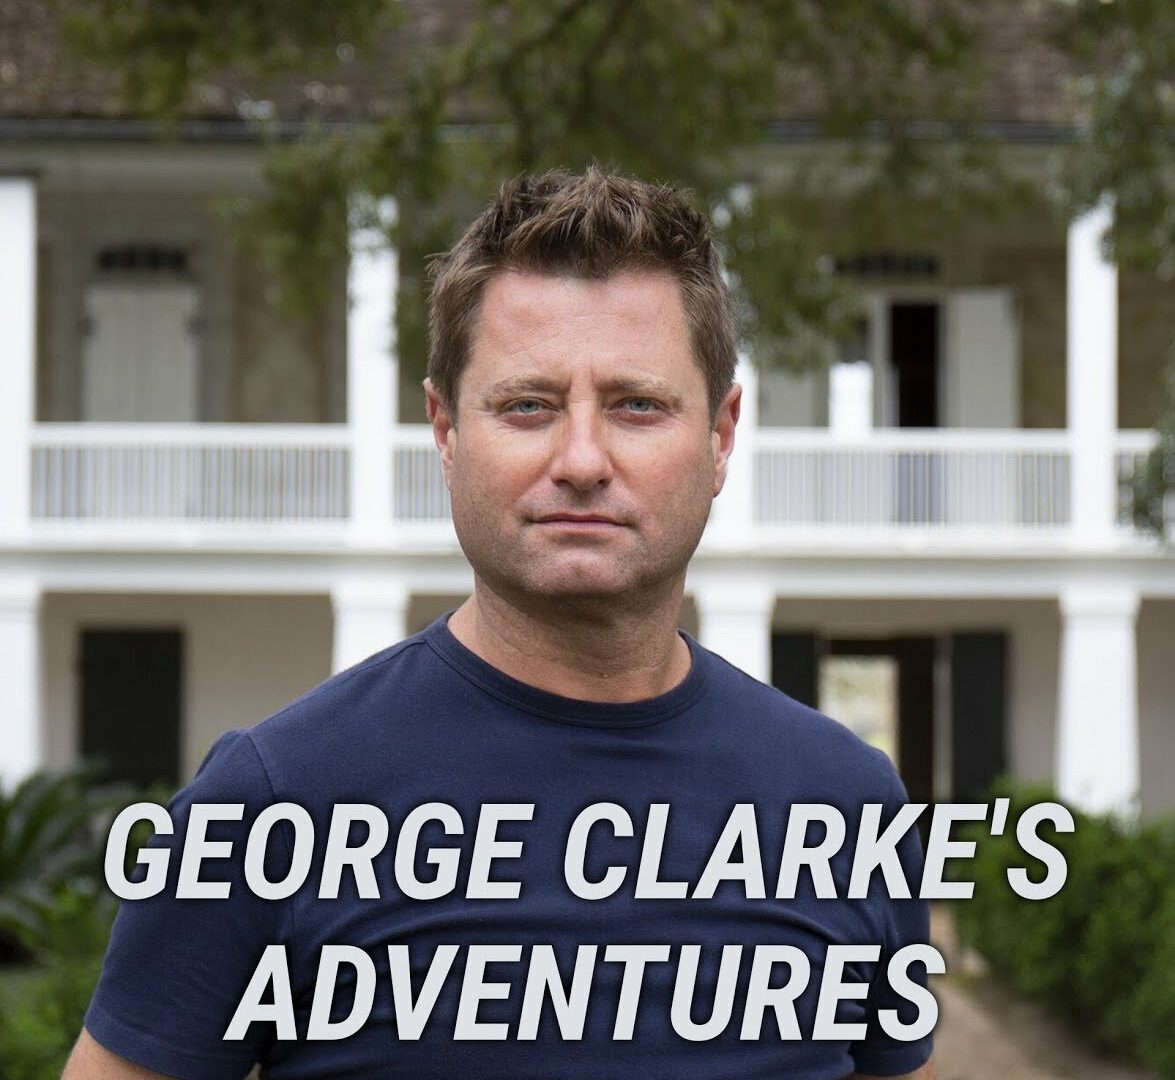 Show George Clarke's Adventures in Americana